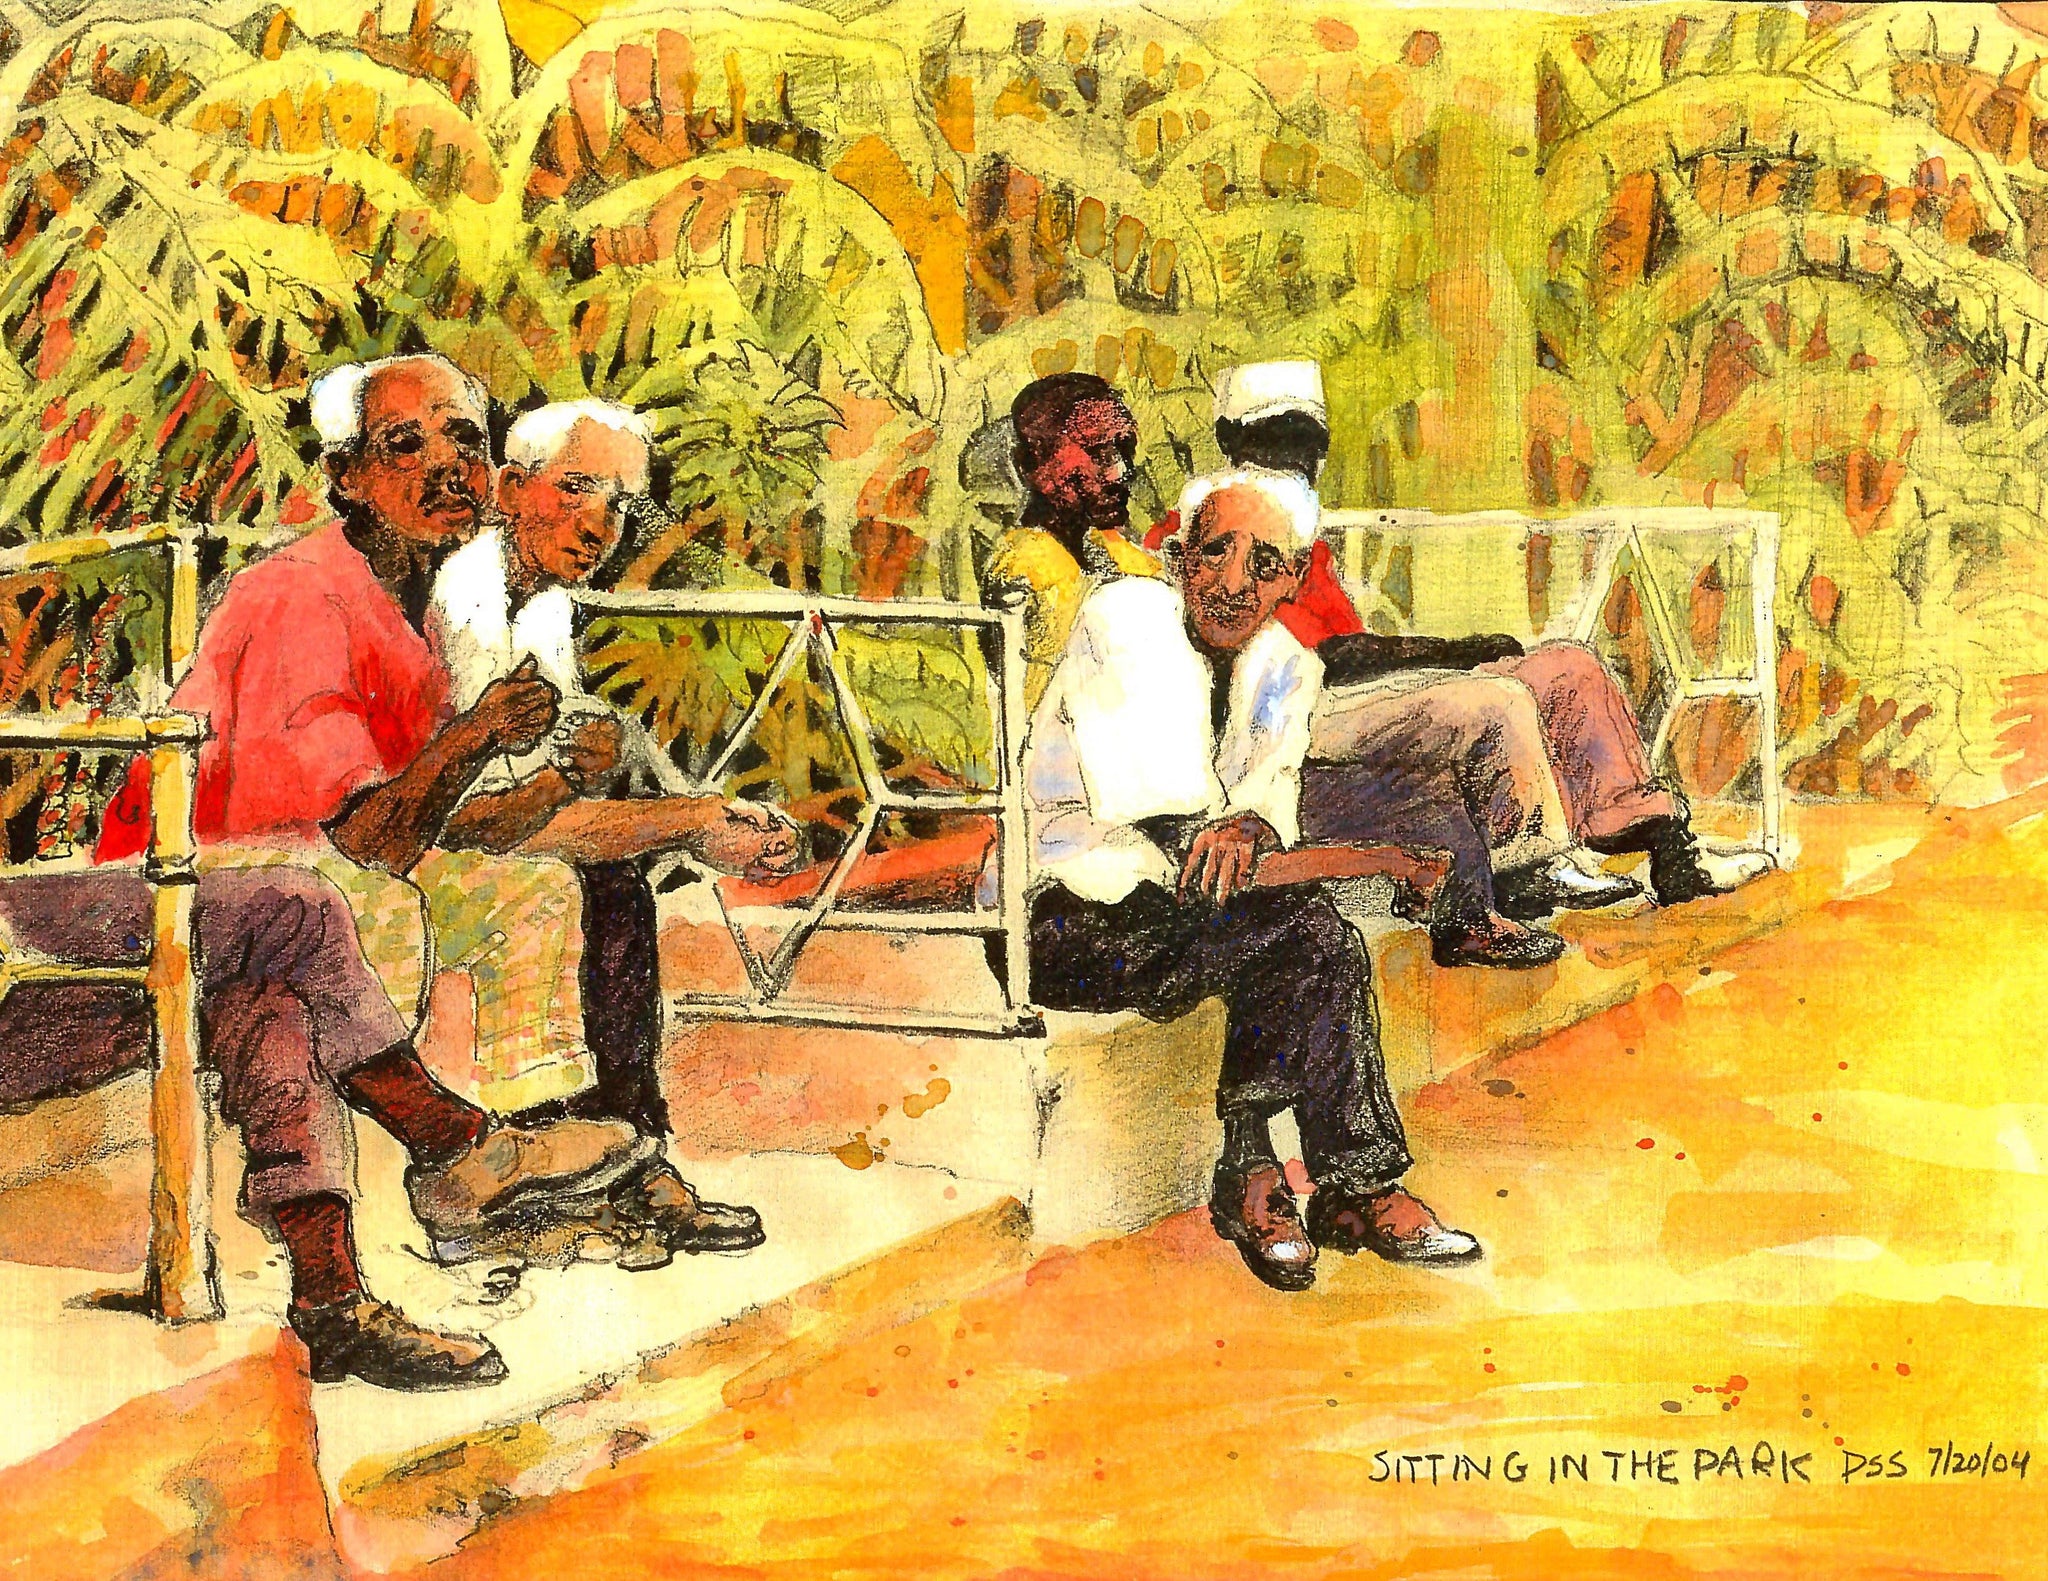 PEOPLE - OLD MEN SITTING AND TALKING IN THEIR NEIGHBORHOOD PARK